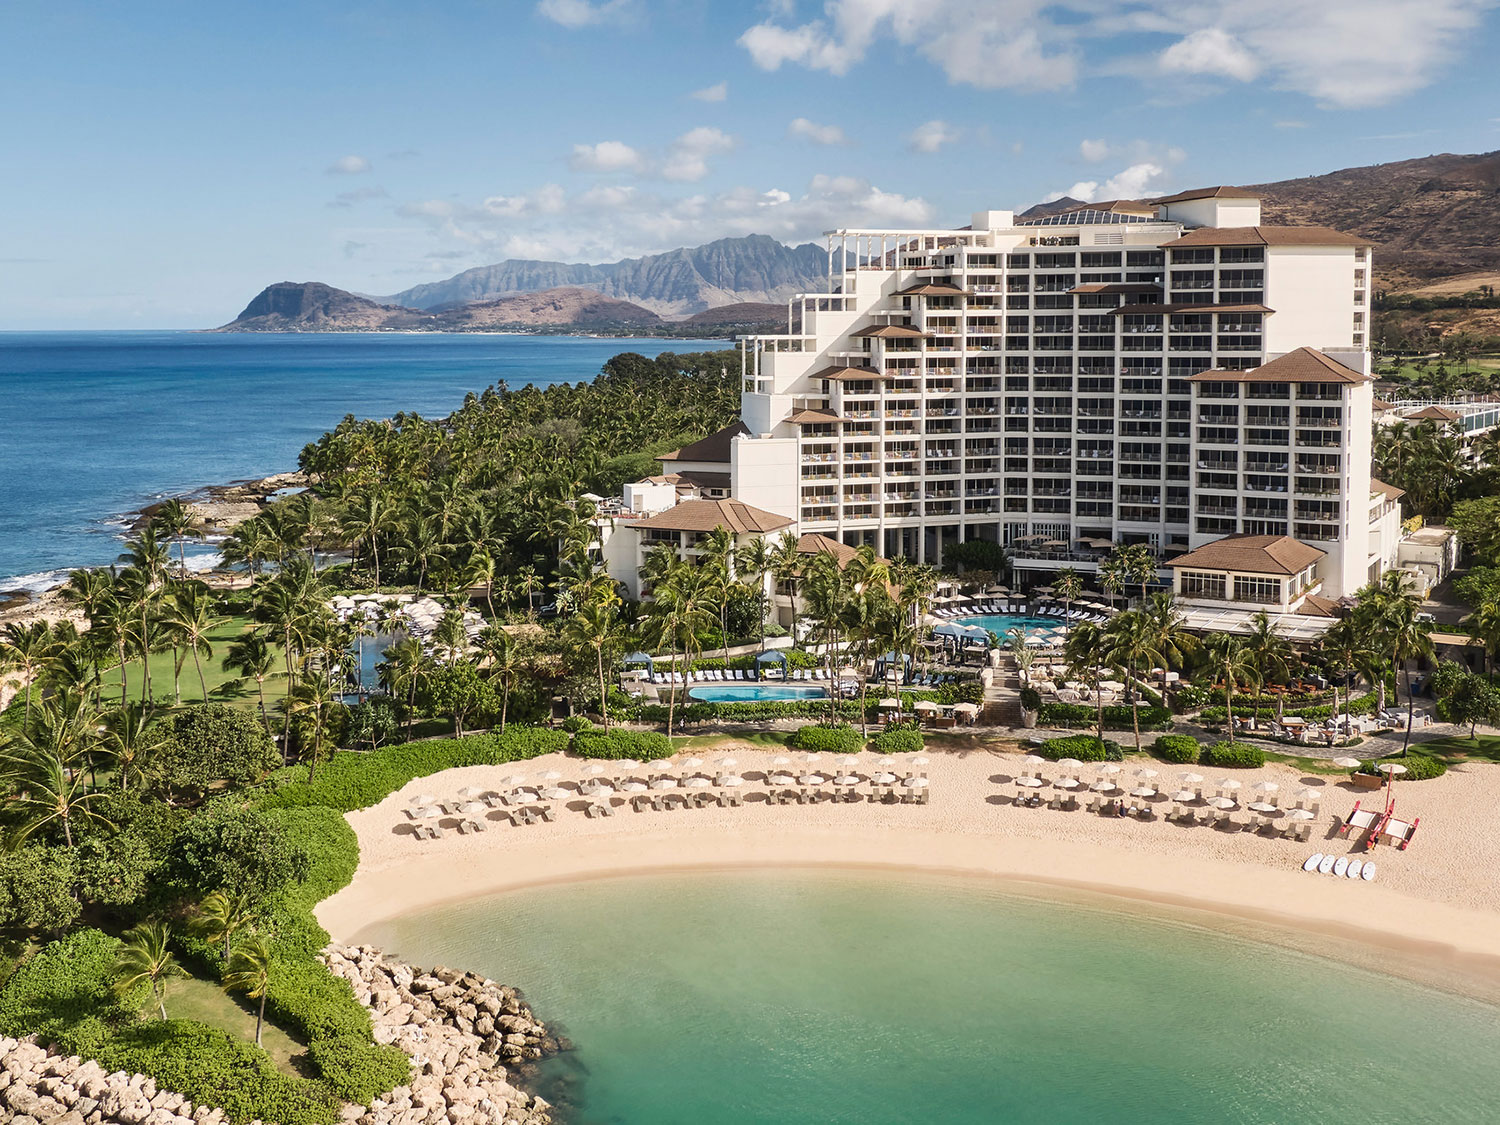 An aerial view of the Four Seasons Resort Oahu at Ko Olina in Hawaii.